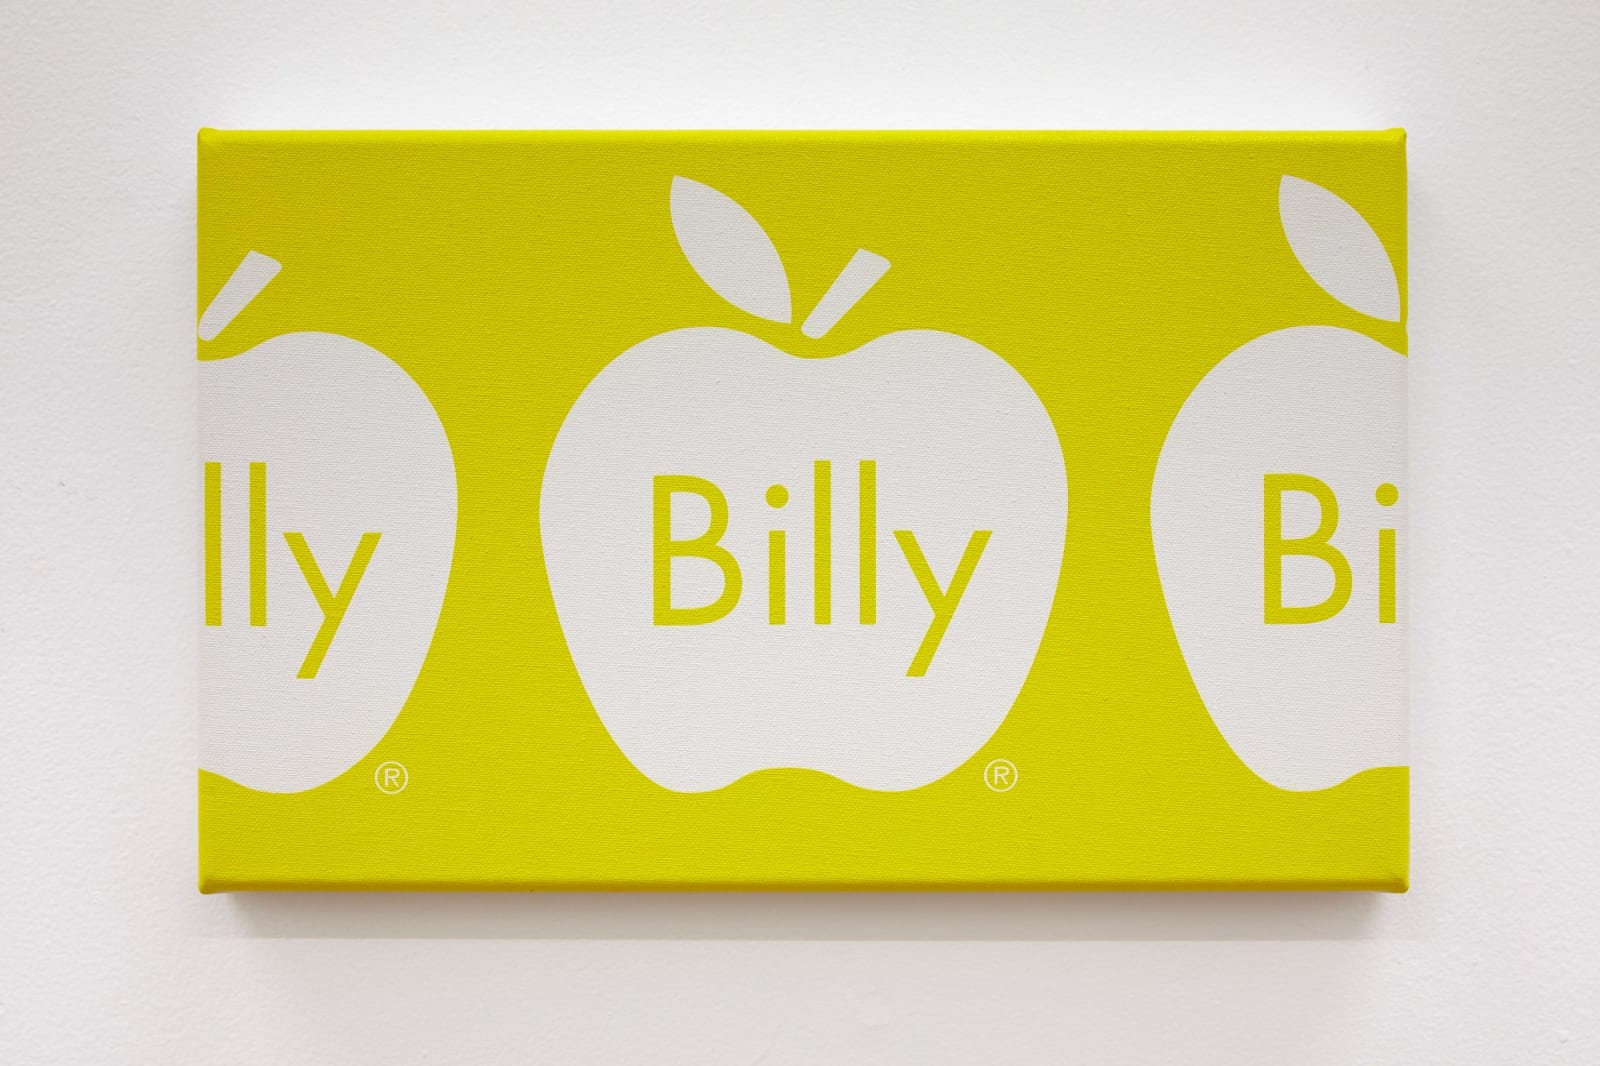 Billy Apple, Frieze (White Apple on Yellow), 2015